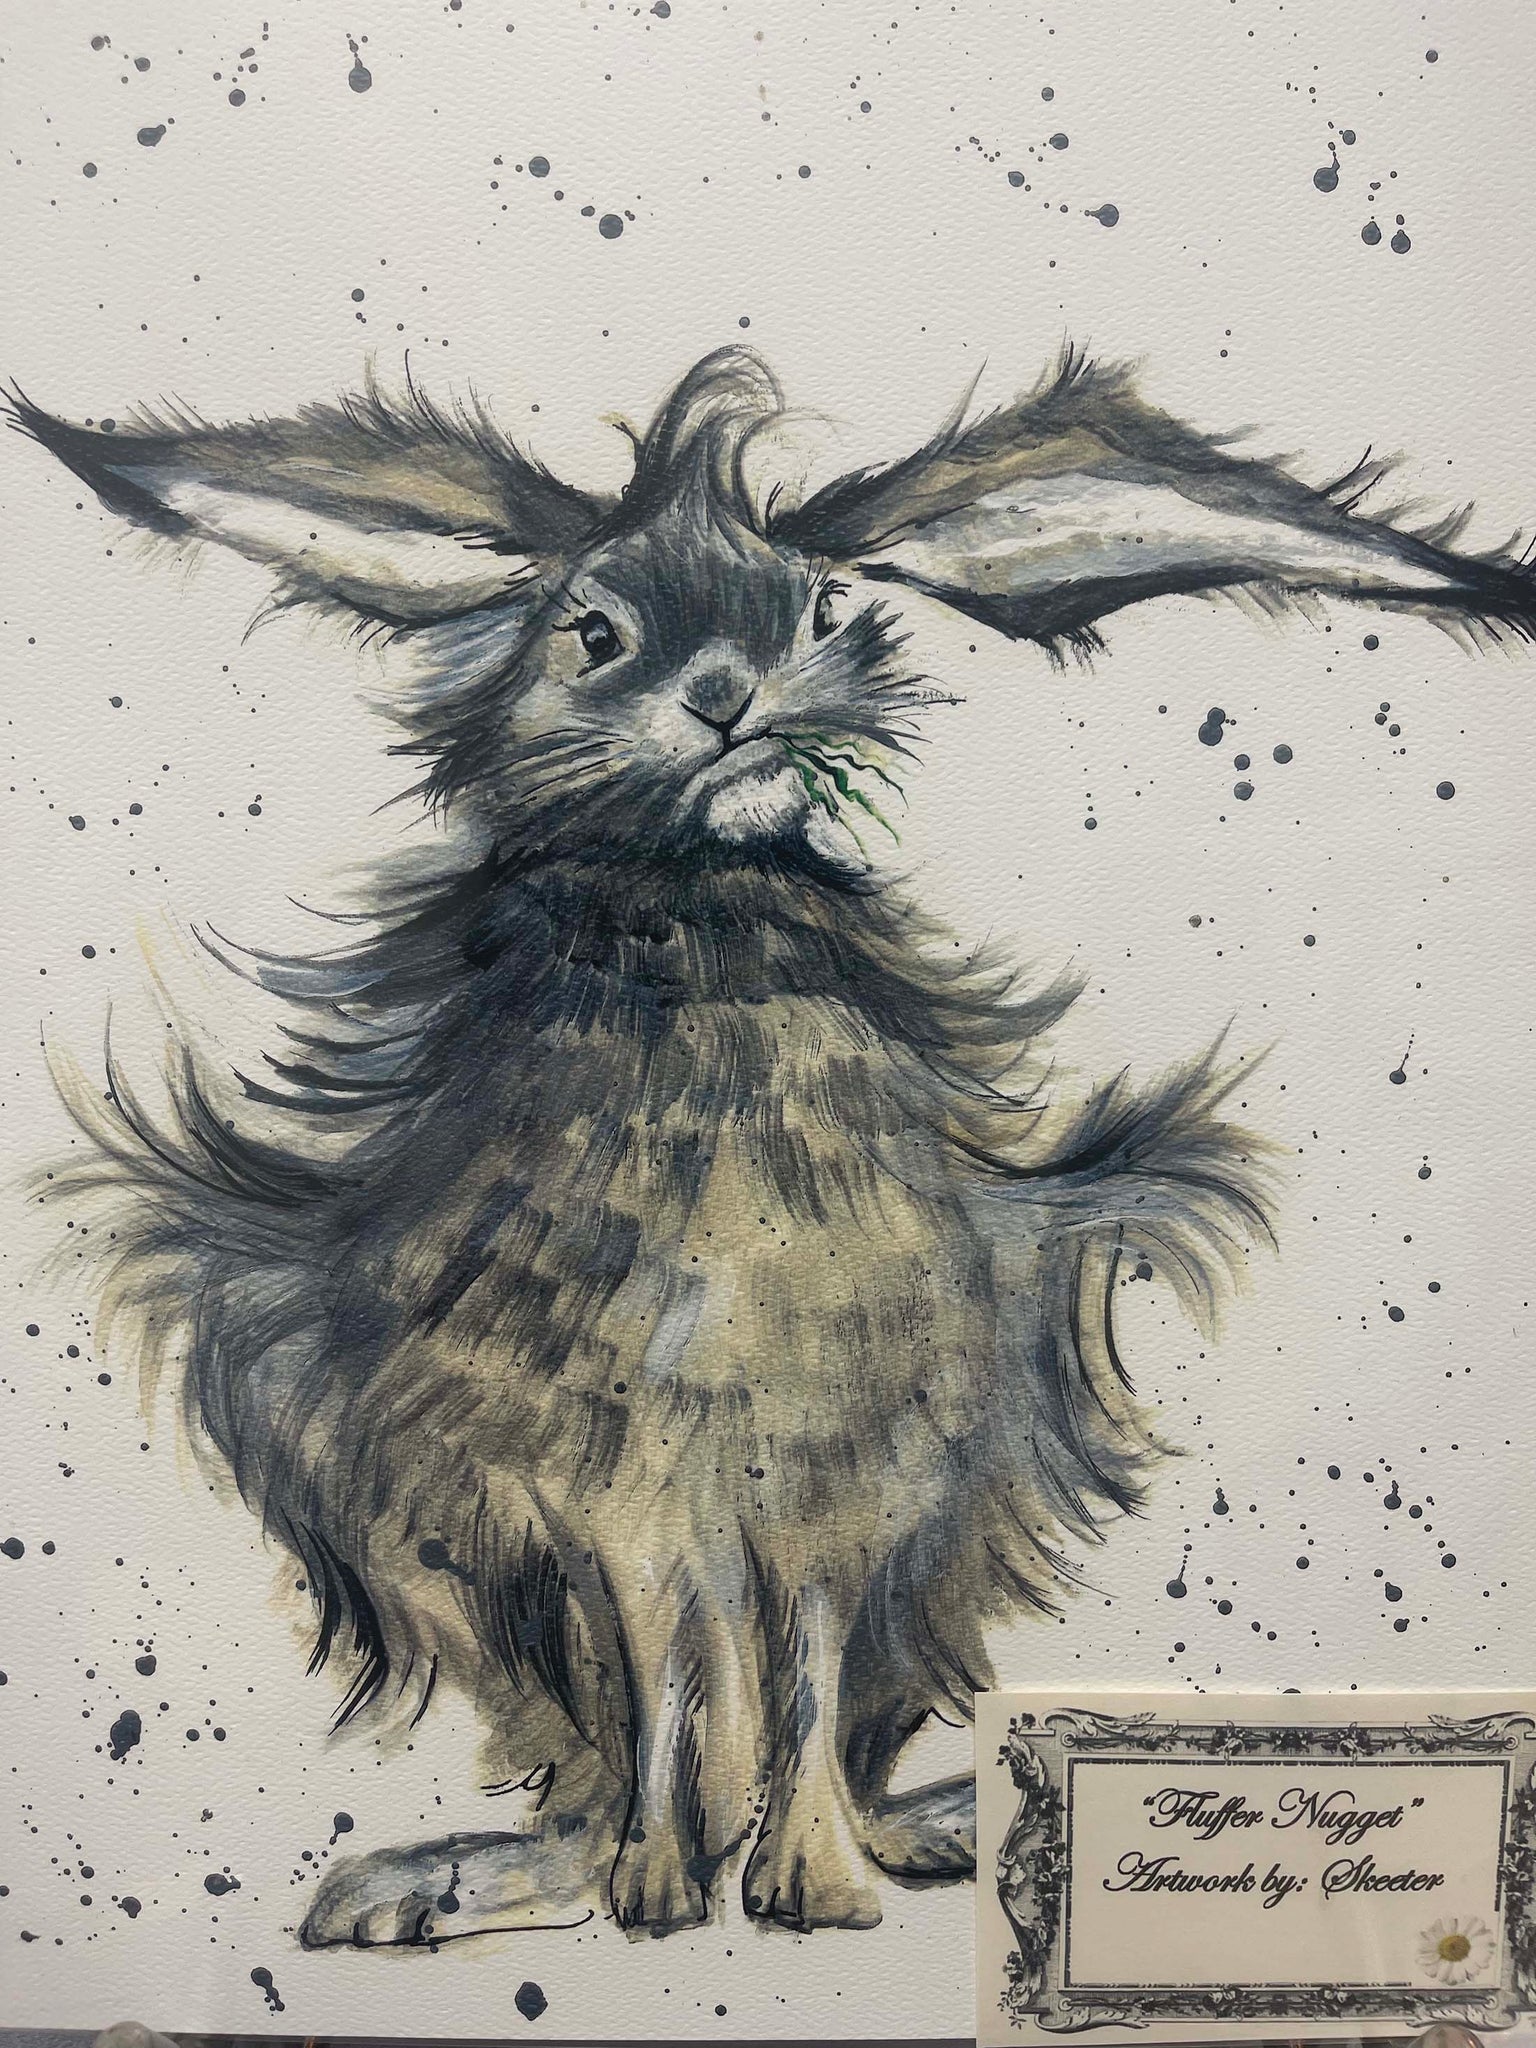 watercolor, rabbit